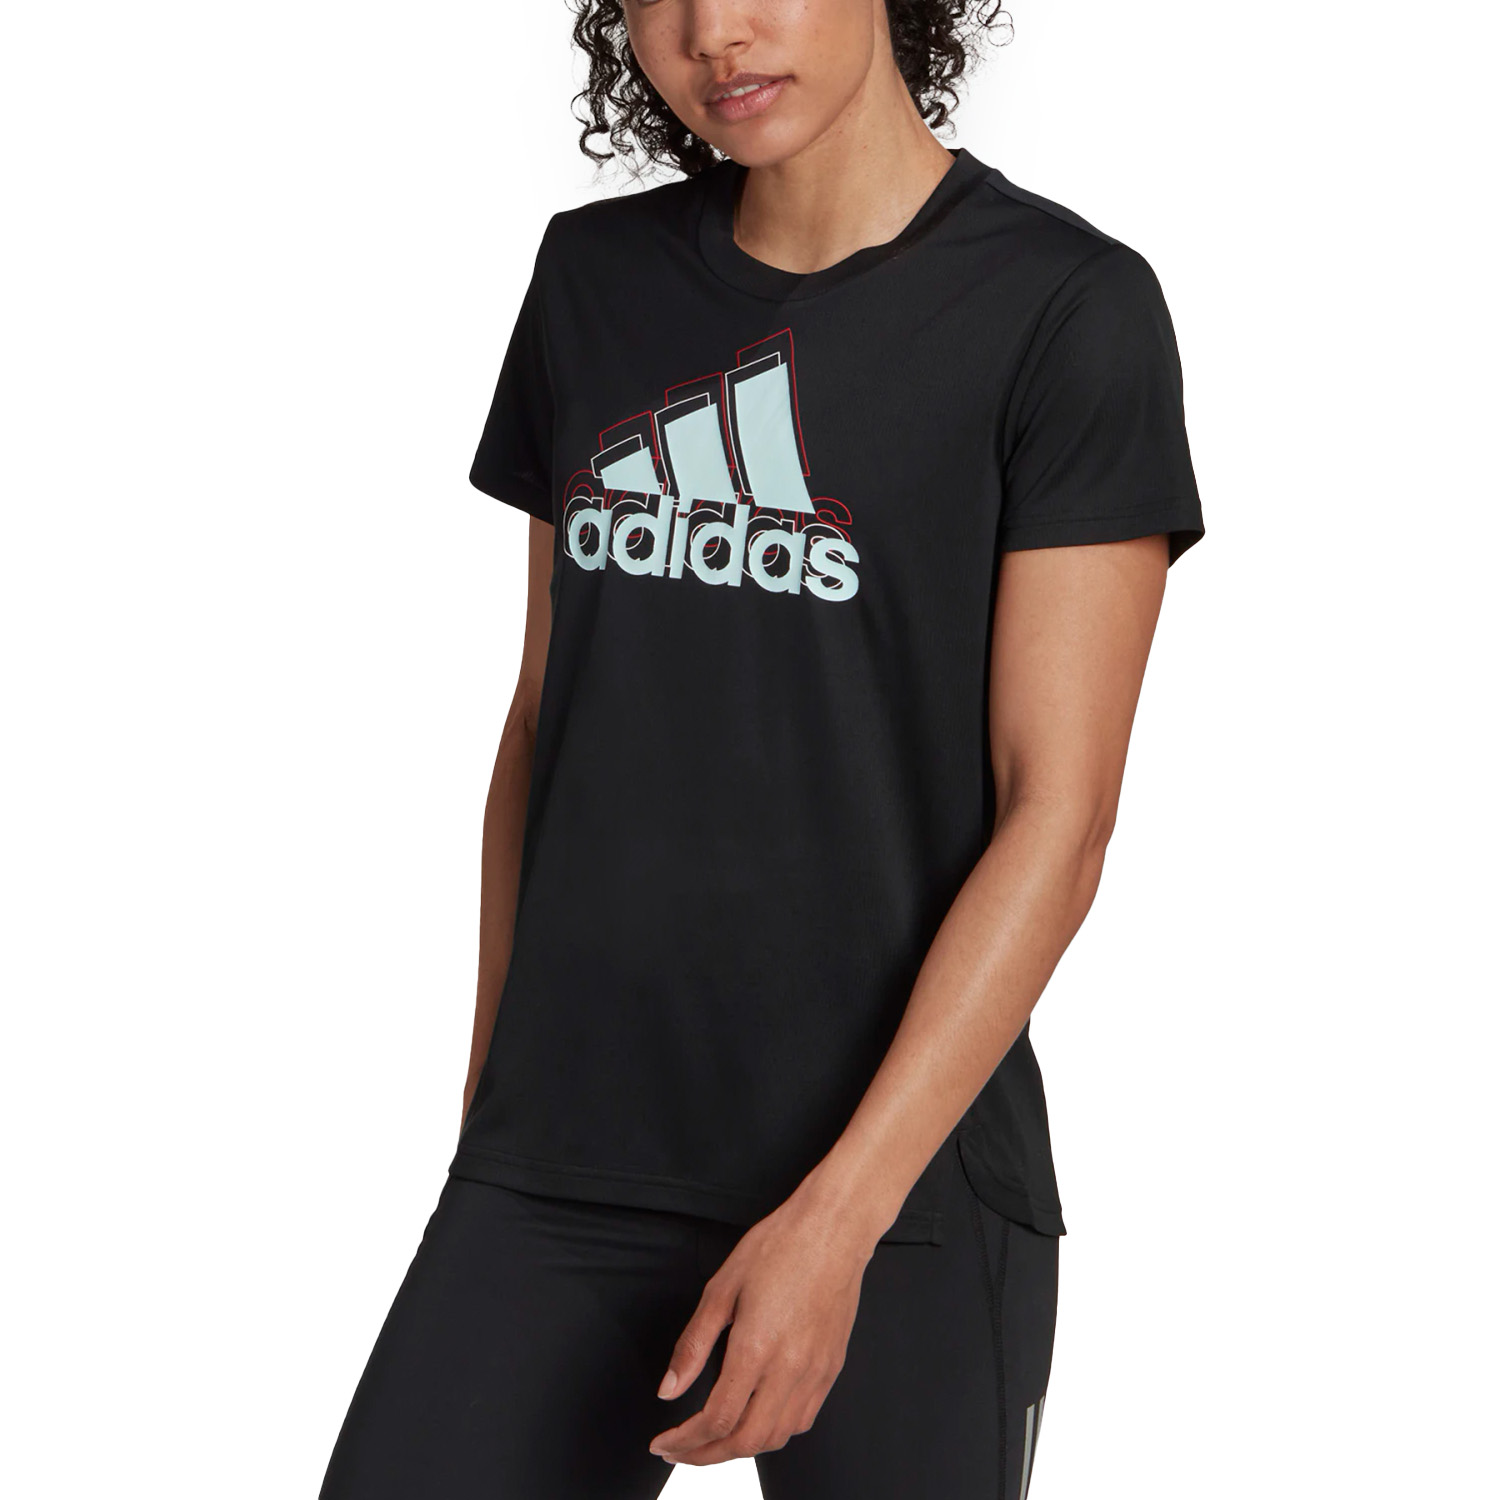 adidas Brand Love Men's Running T-Shirt - Black